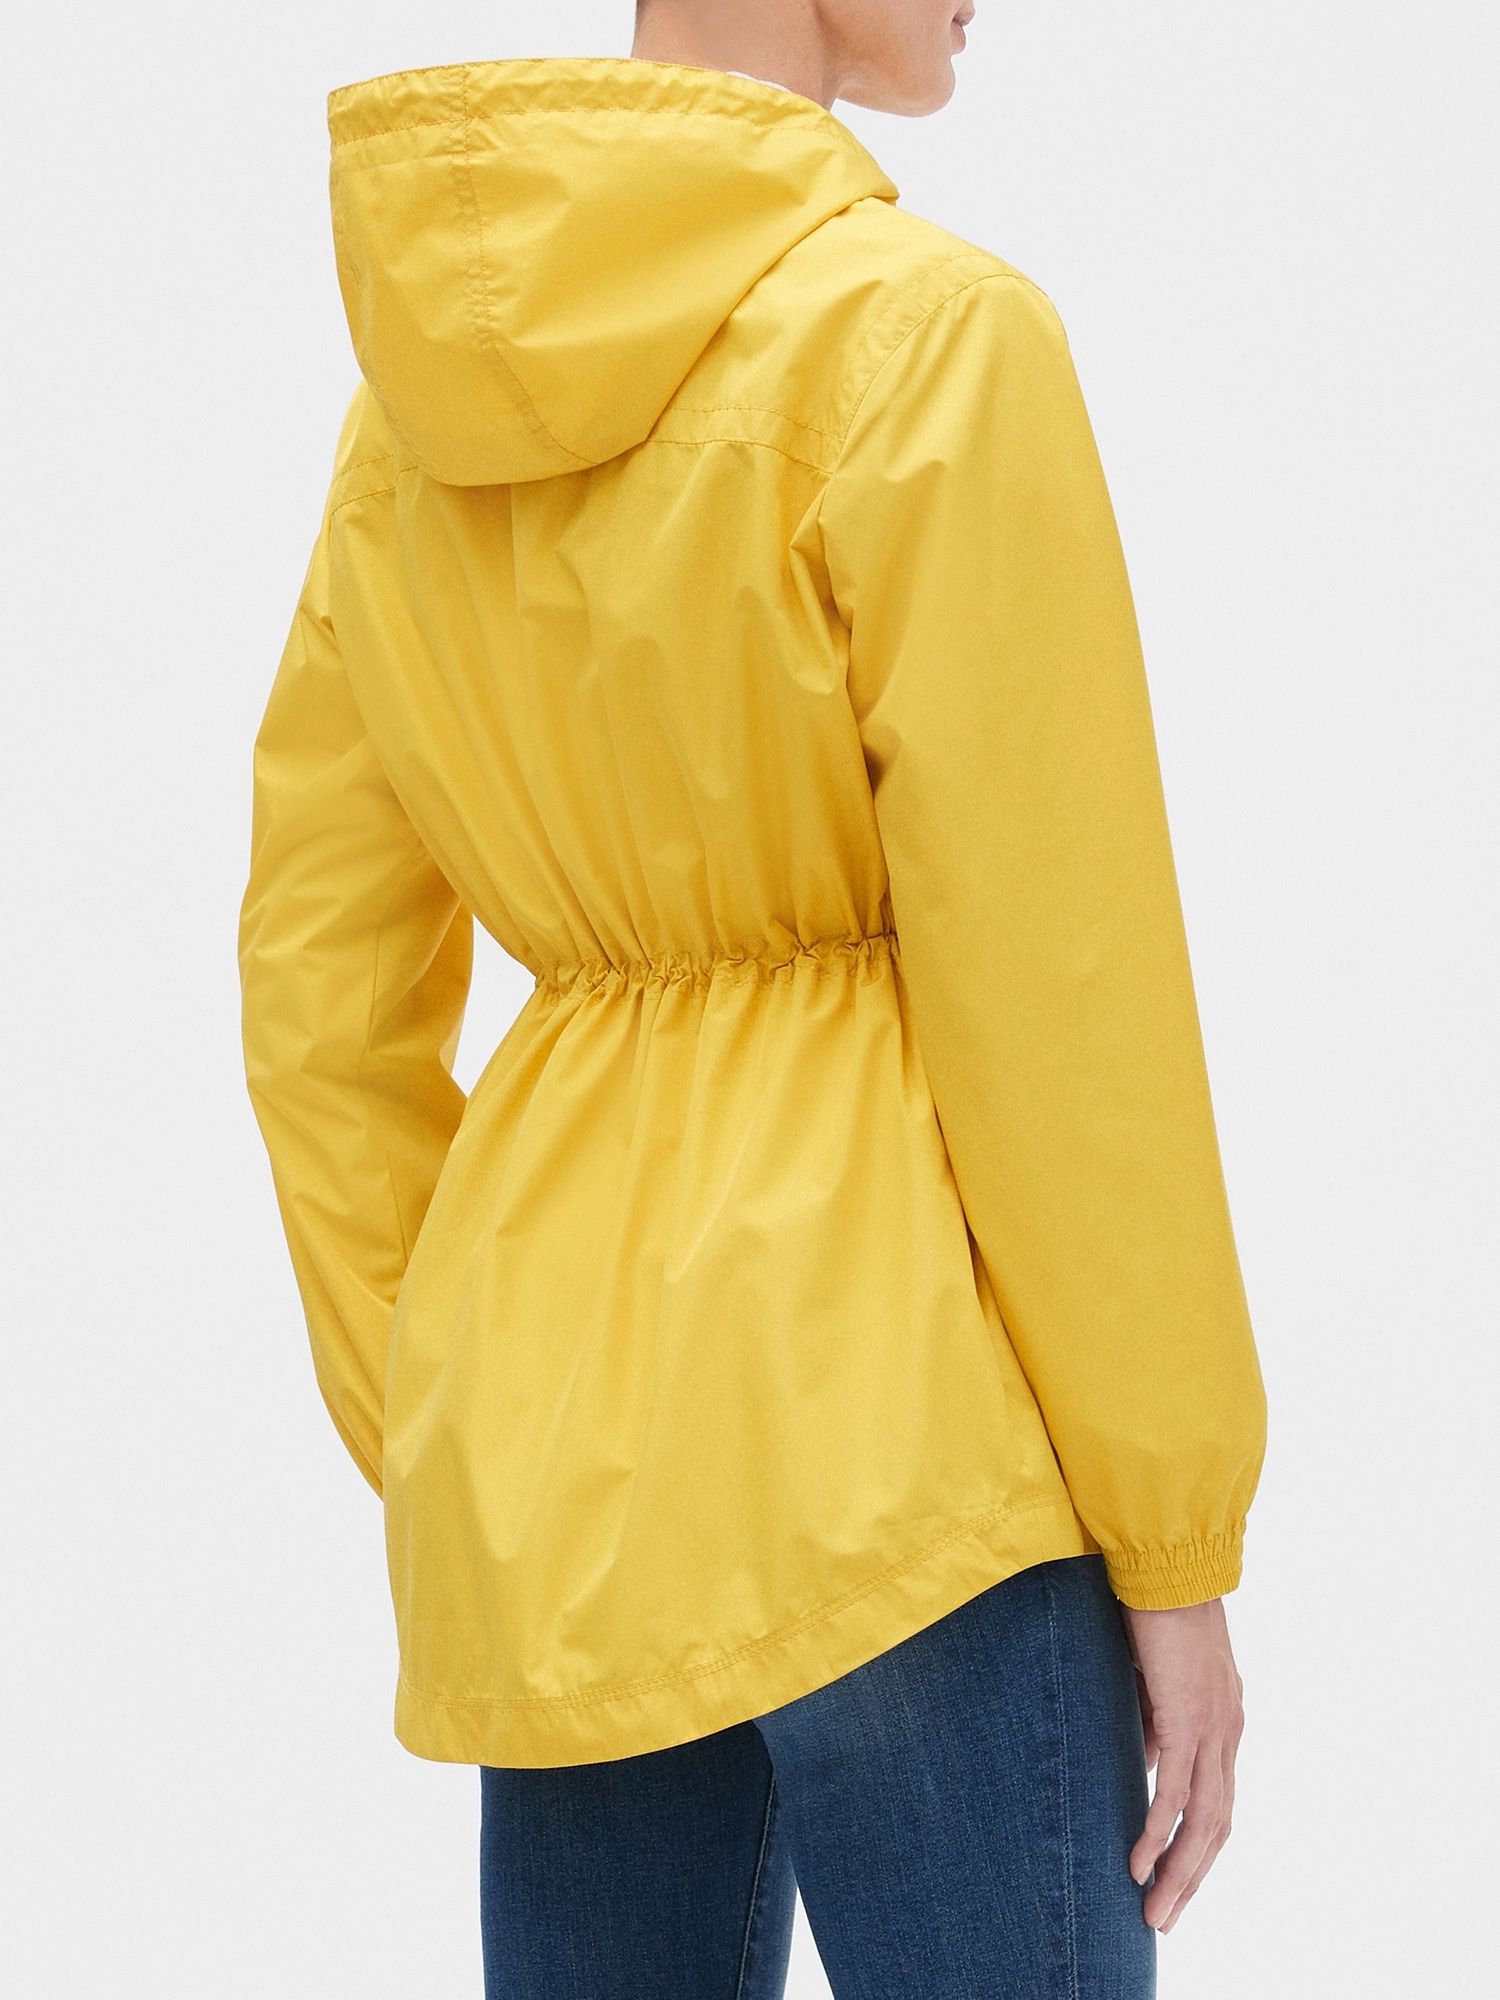 rain jacket gap